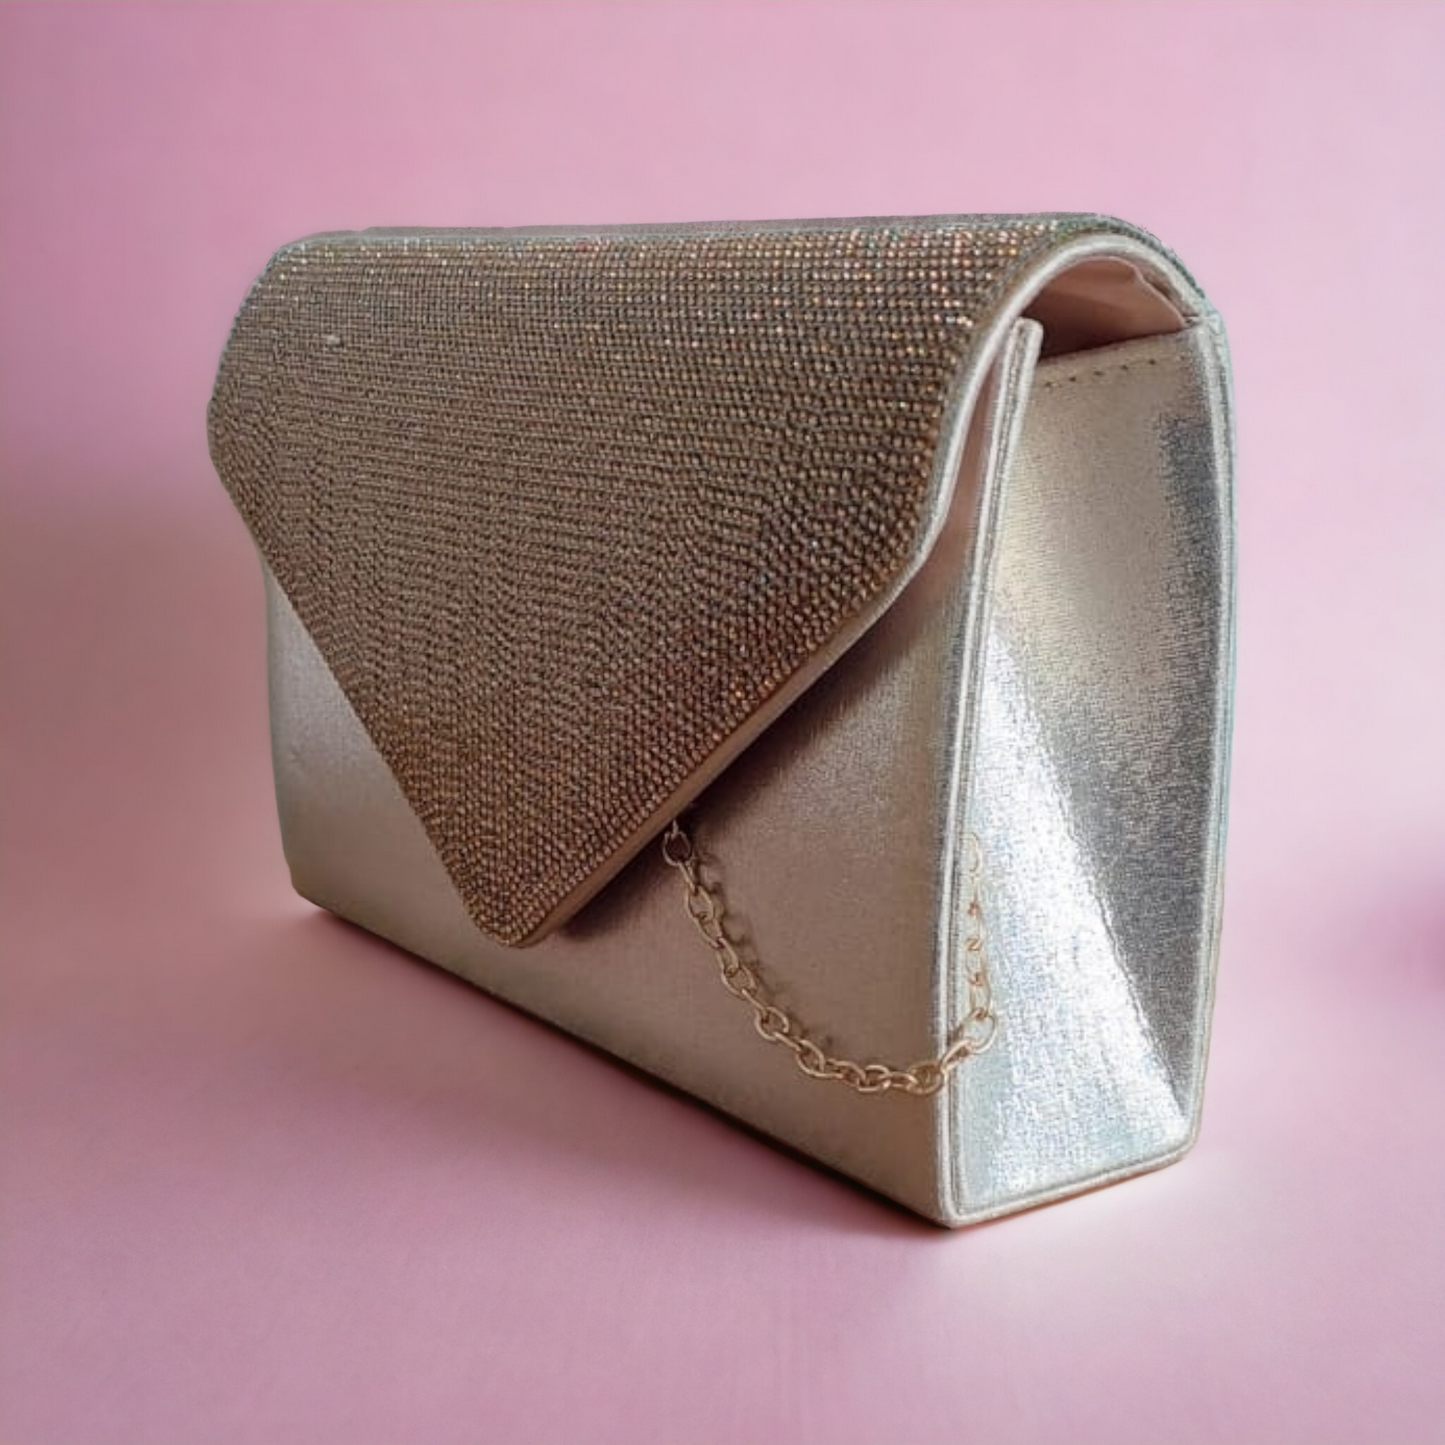 Diamonte crystal gold clutch handbag